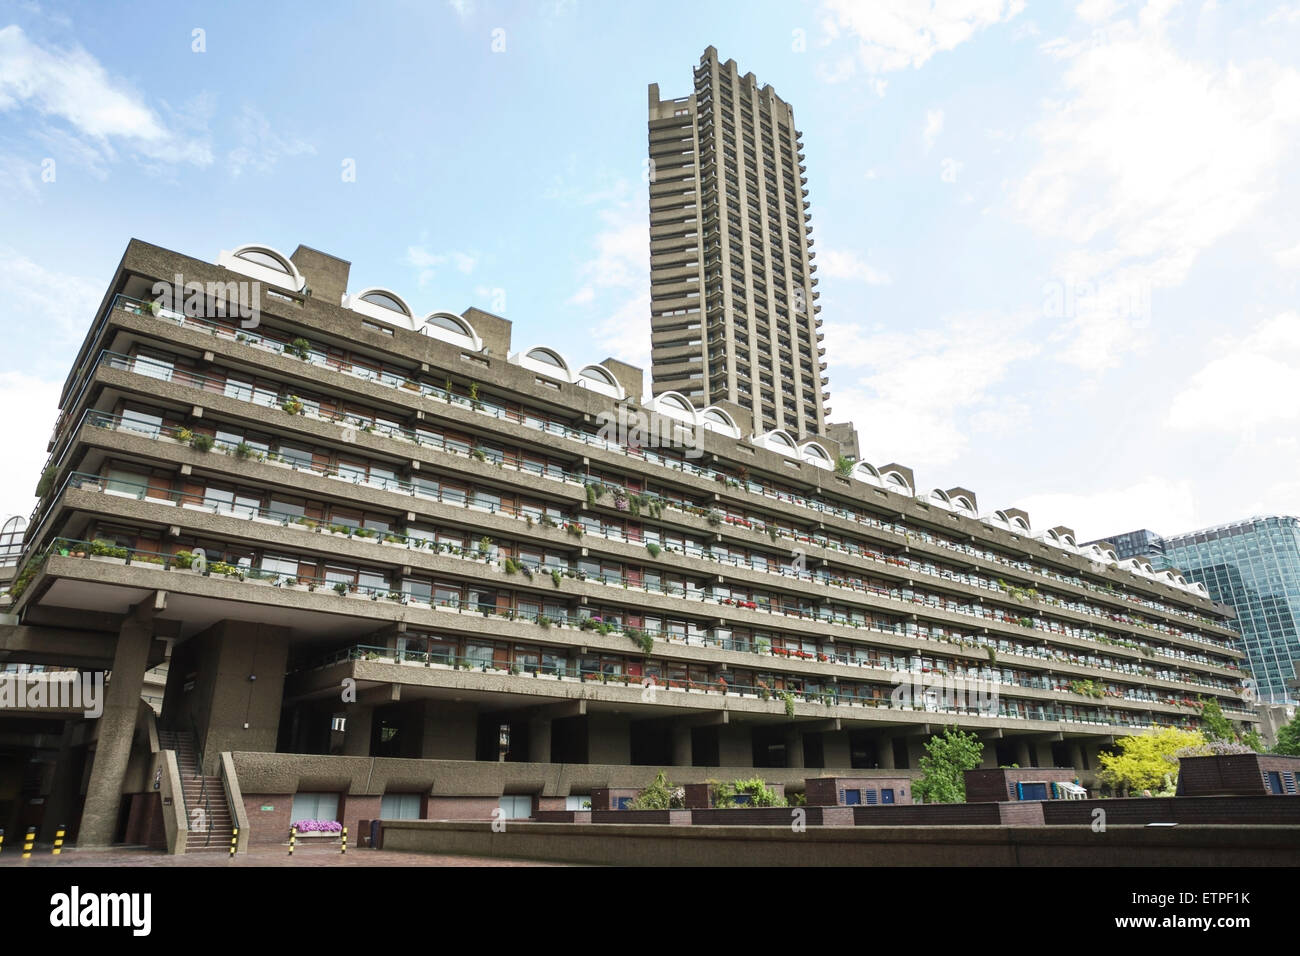 The Barbican Estate City Of London England Uk Concrete Flats